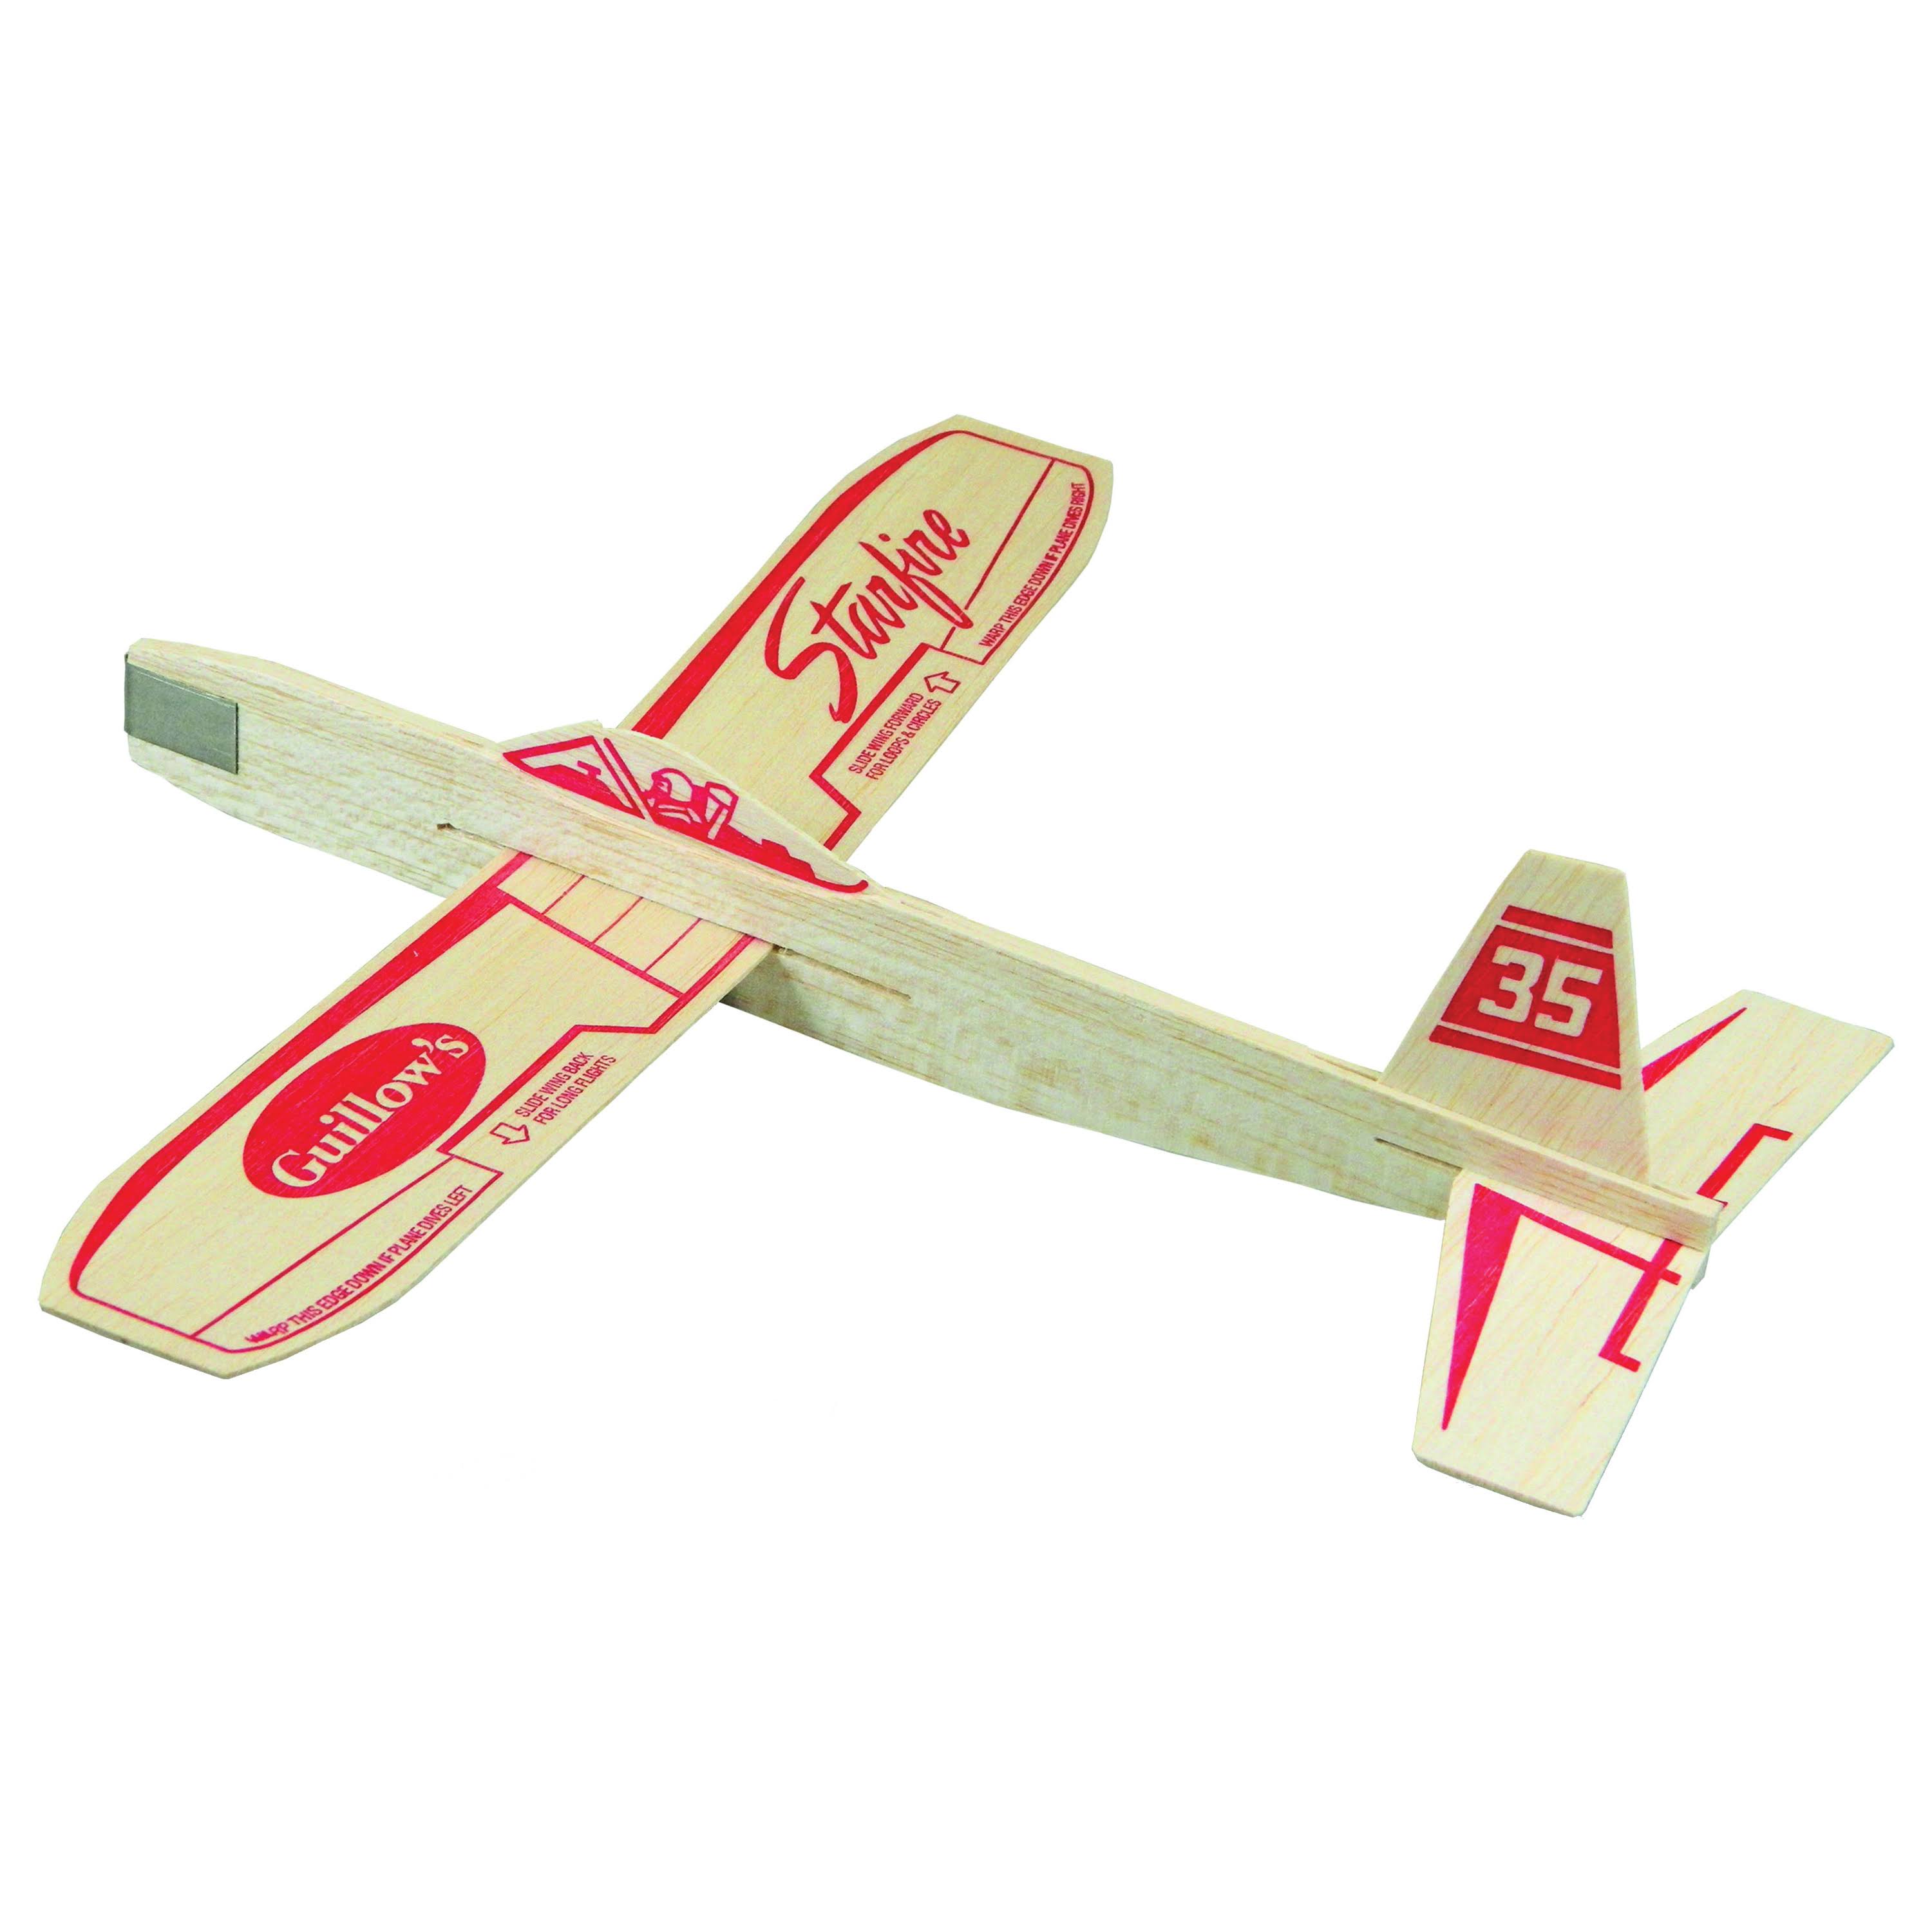 Guillow's Balsa Starfire Glider Balsa Model Aeroplane